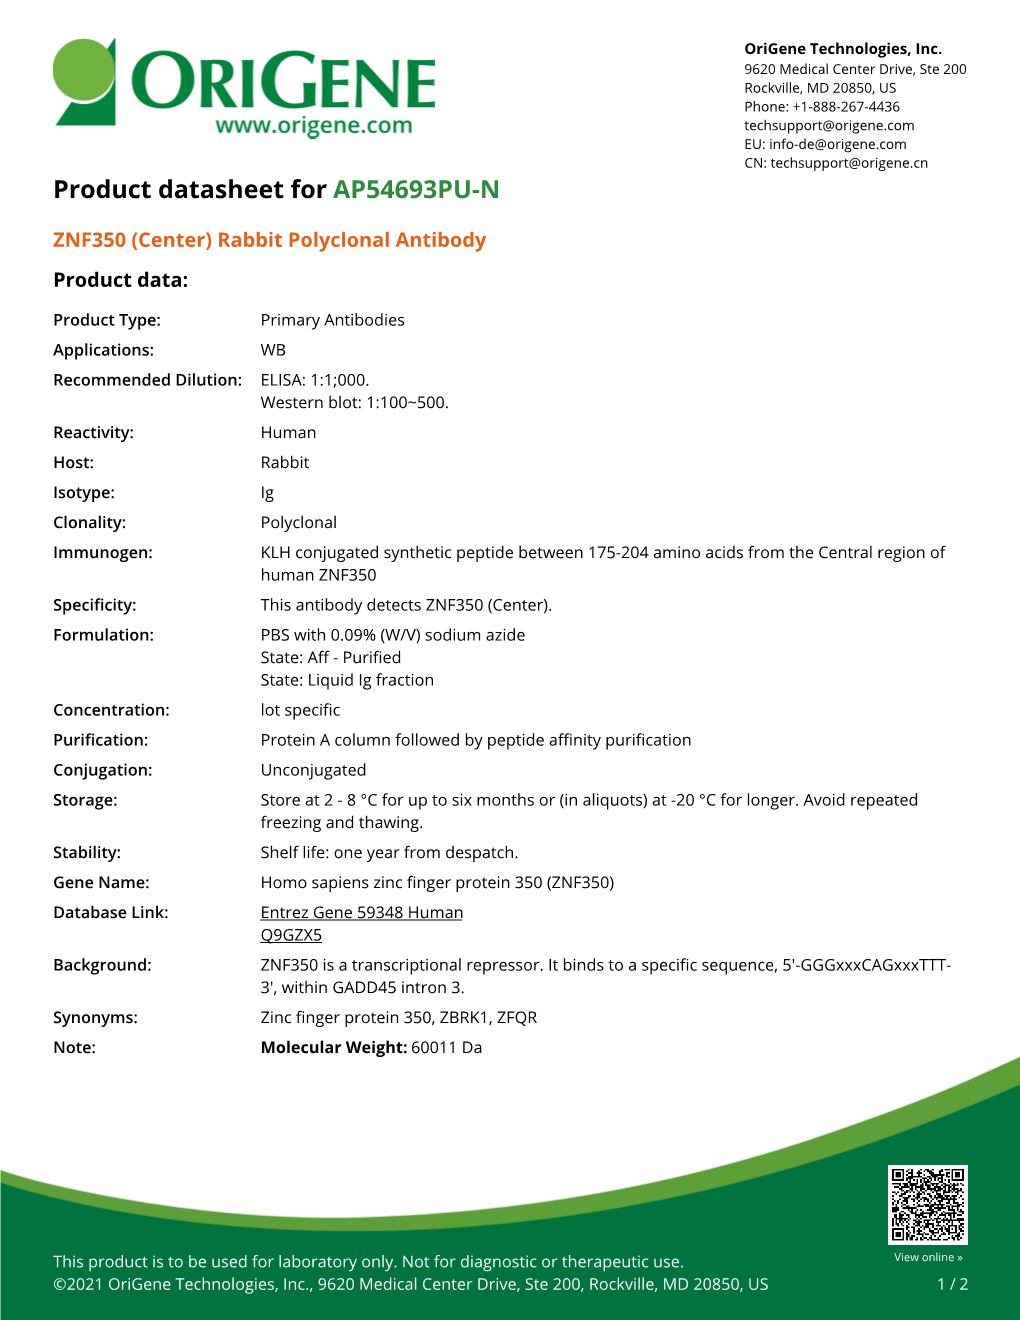 ZNF350 (Center) Rabbit Polyclonal Antibody Product Data